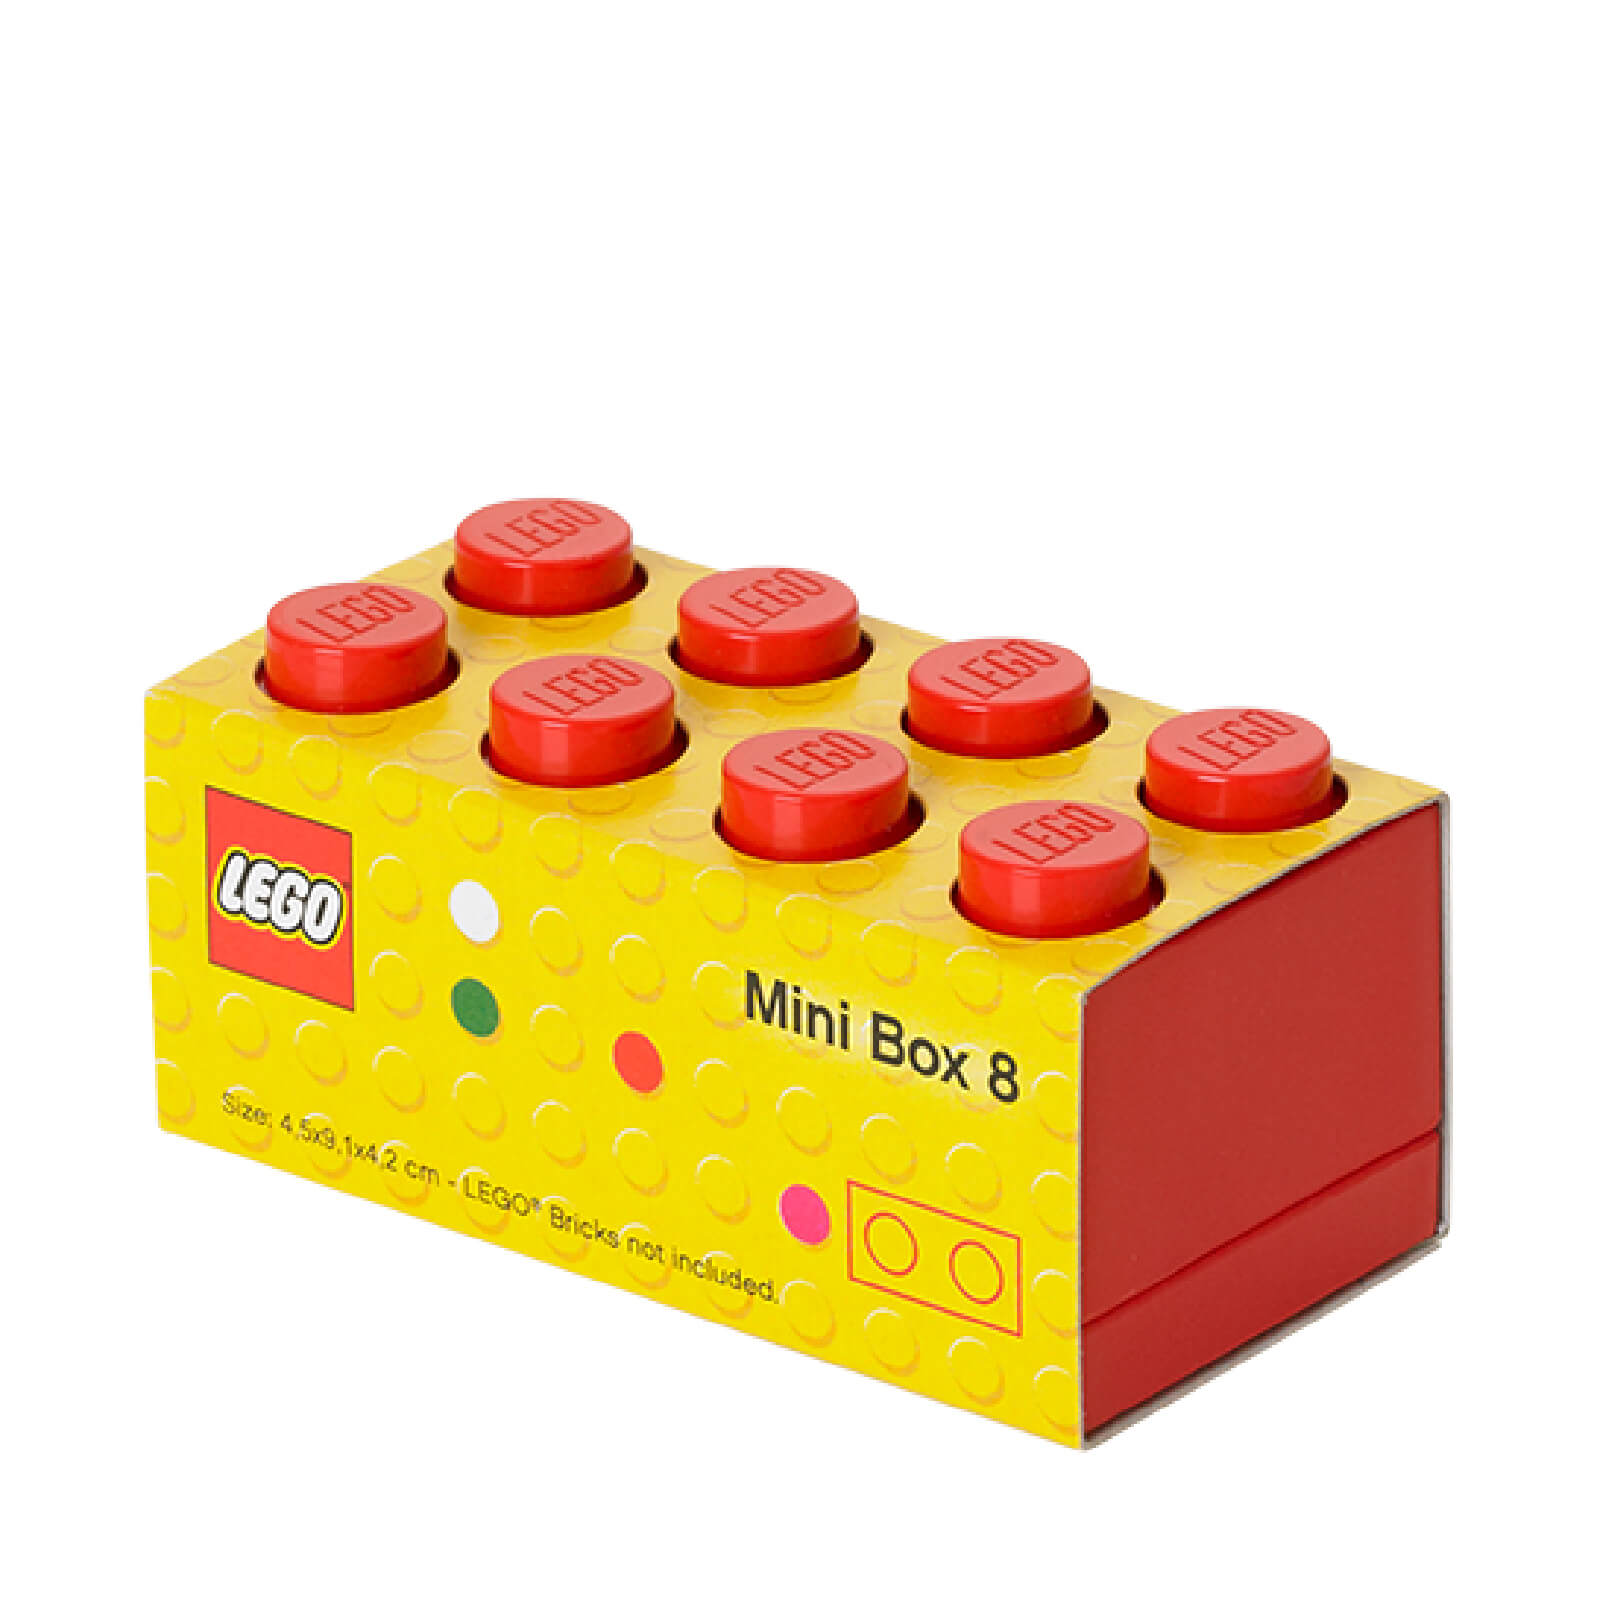 Mini Ladrillo de almacenamiento LEGO (8 espigas) - Rojo